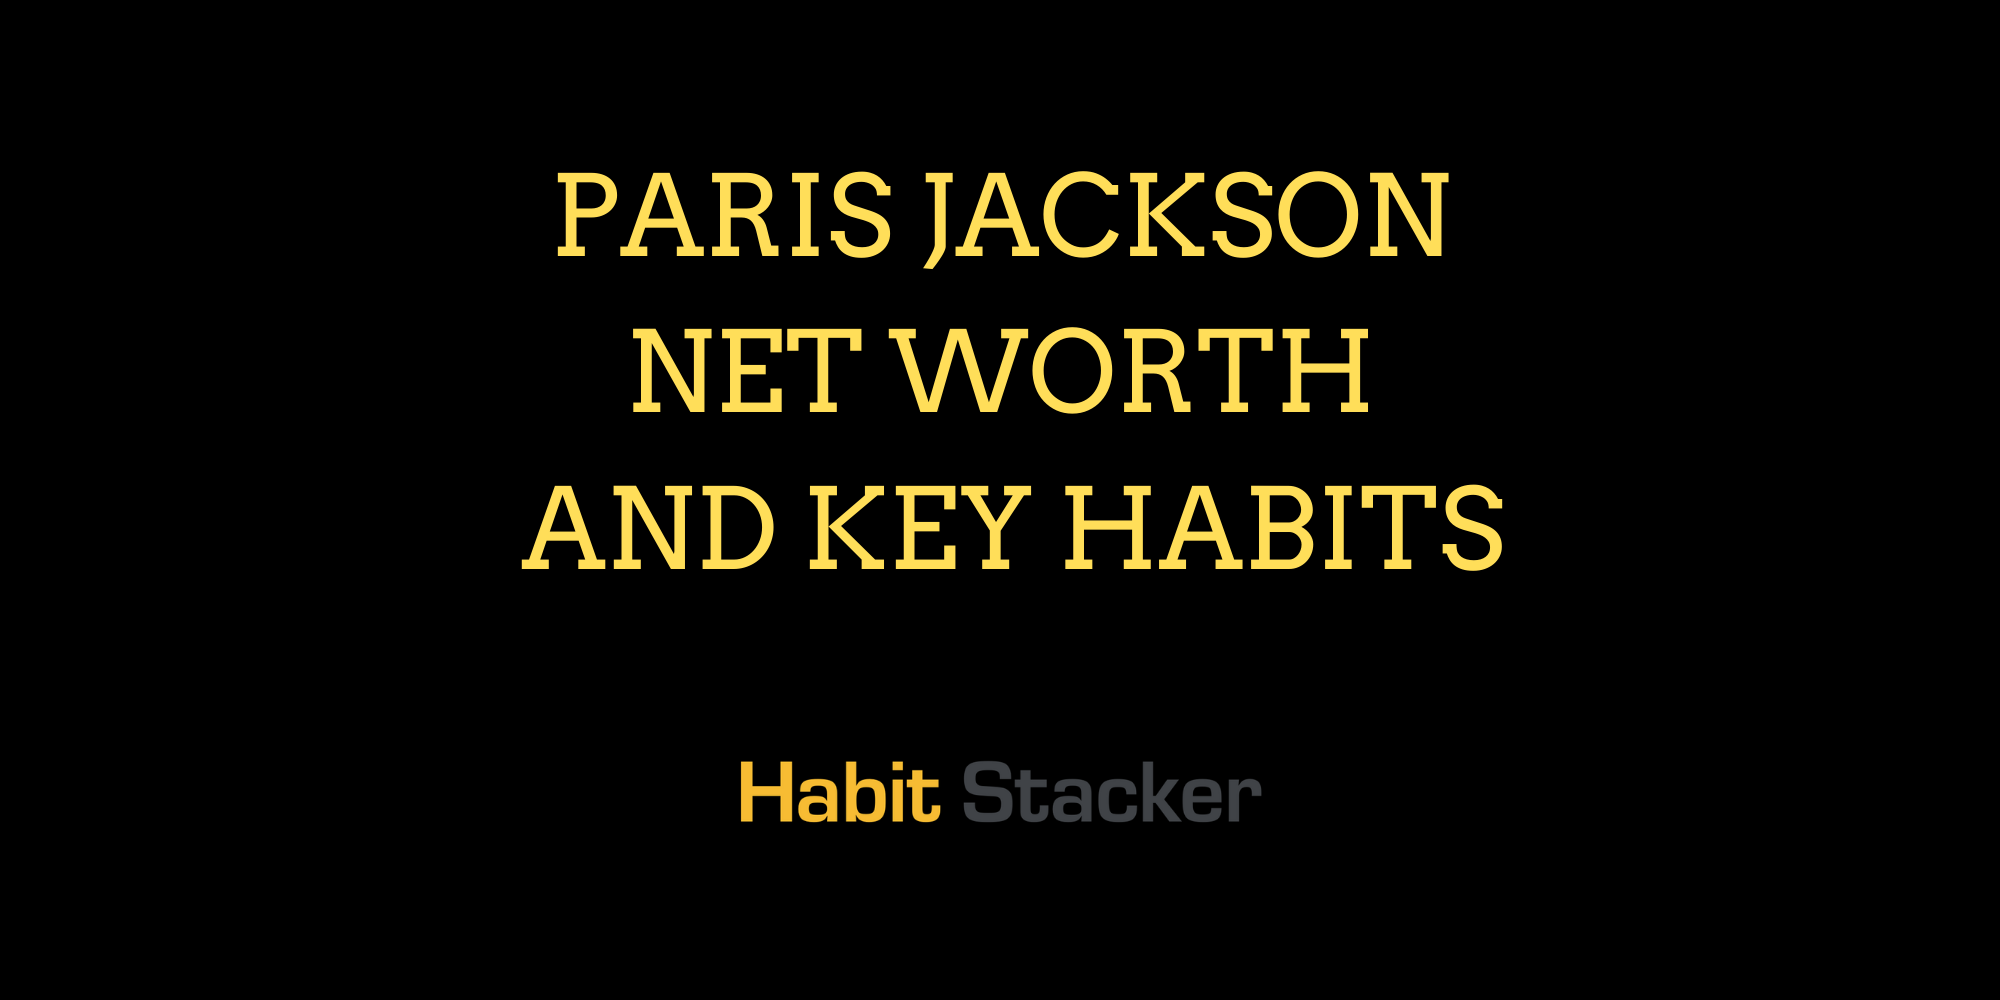 Paris Jackson Net Worth And Key Habits